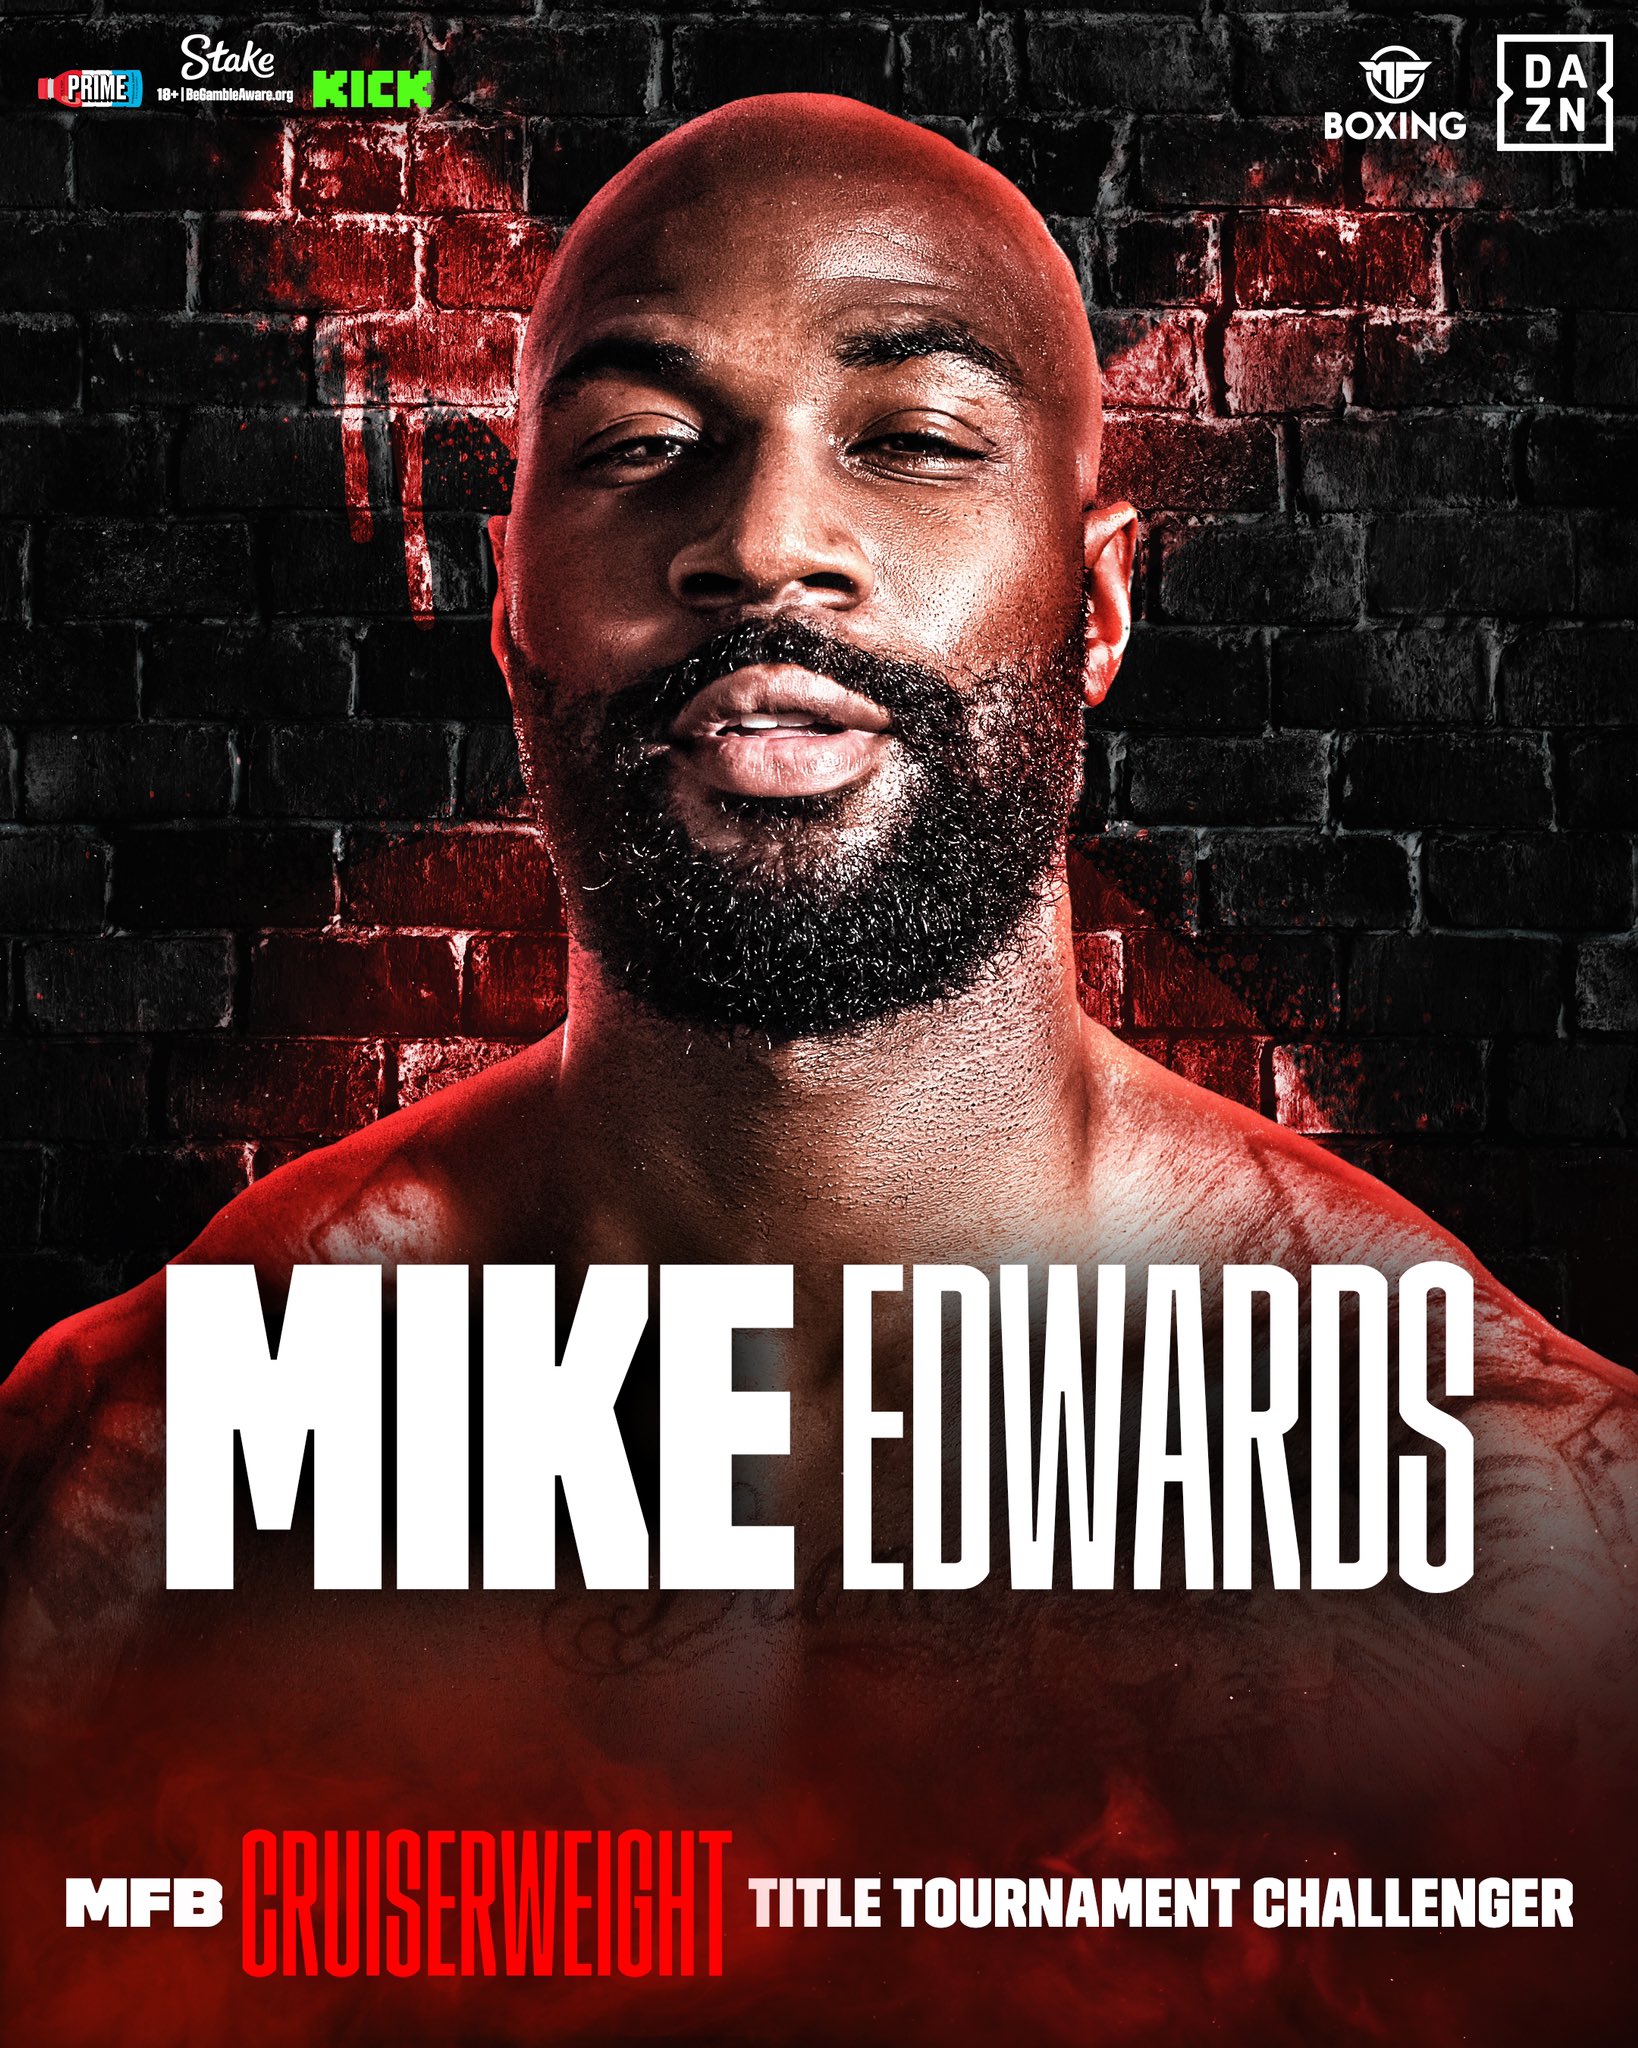 BBNaija’s Mike Edwards anticipates his debut in professional boxing